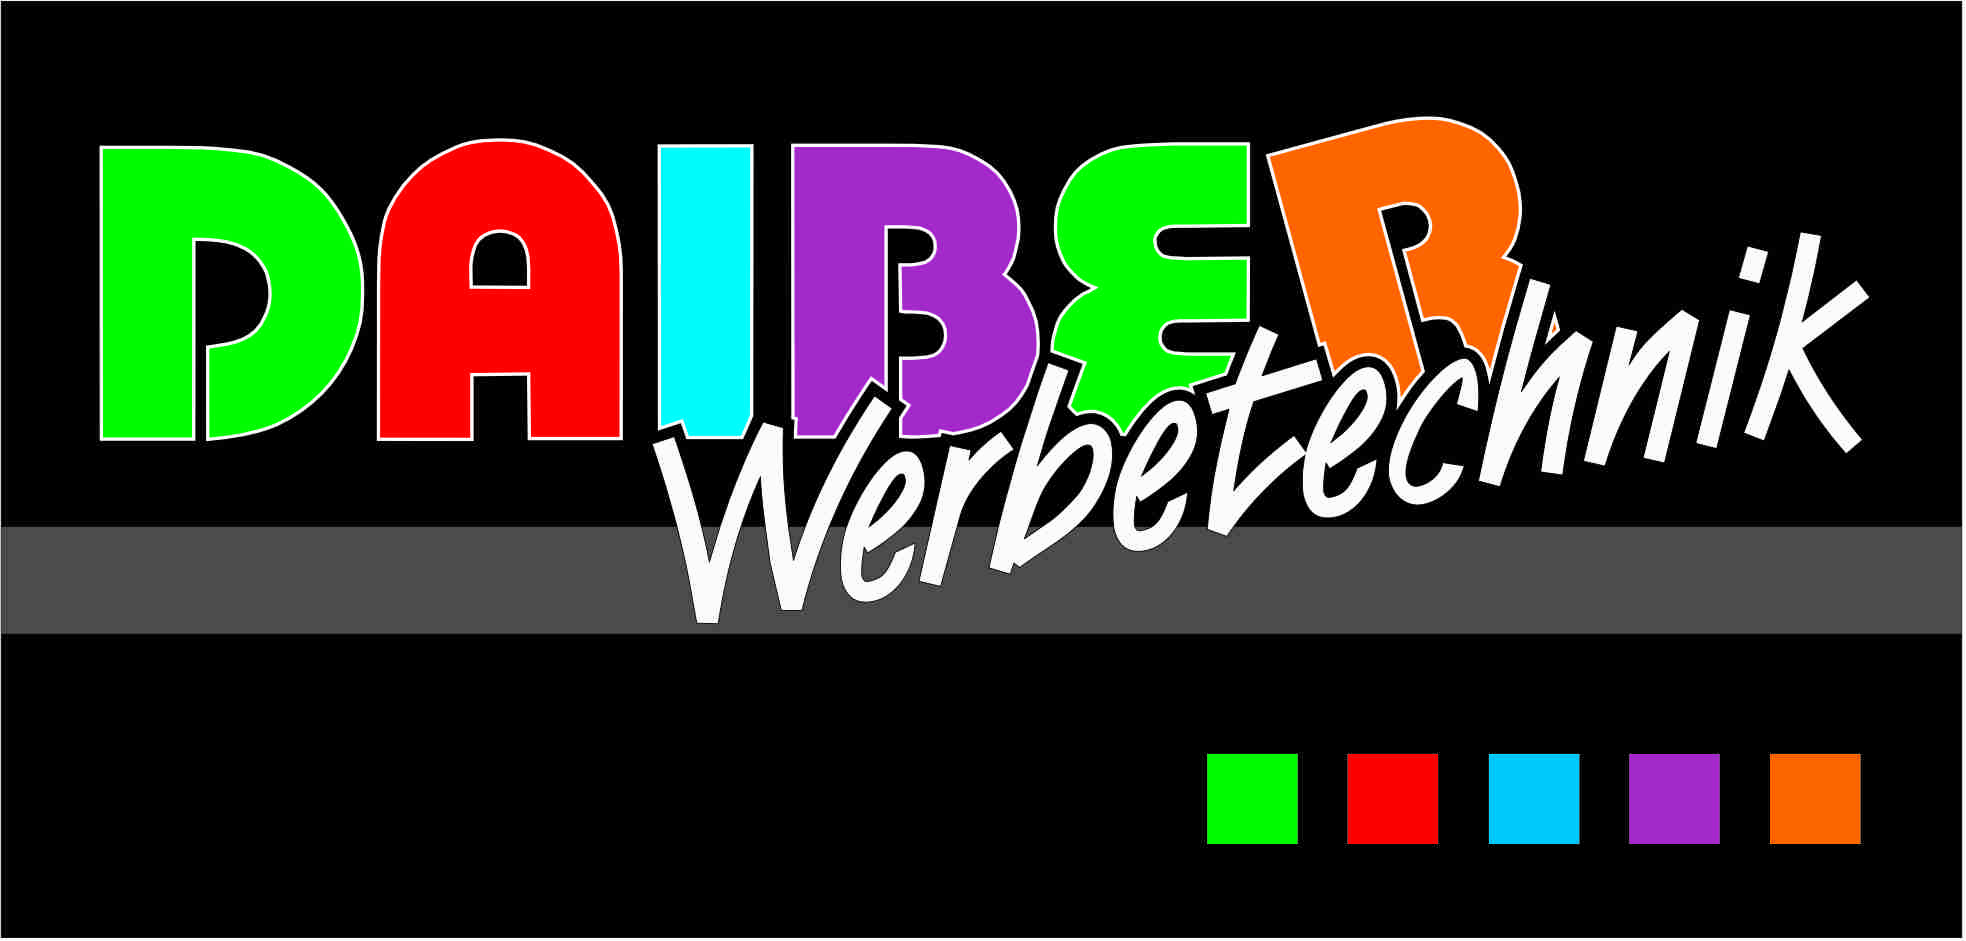 Daiber Logo.jpg